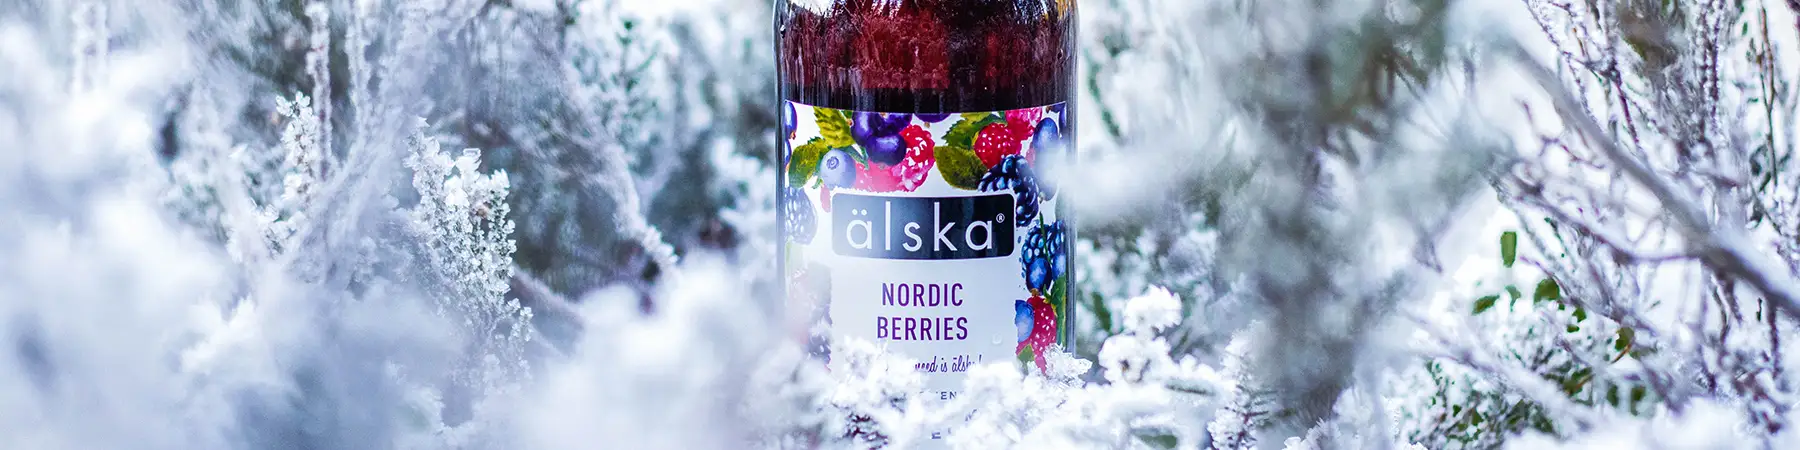 bottle of alska nordic berries outdoors in snow covered trees